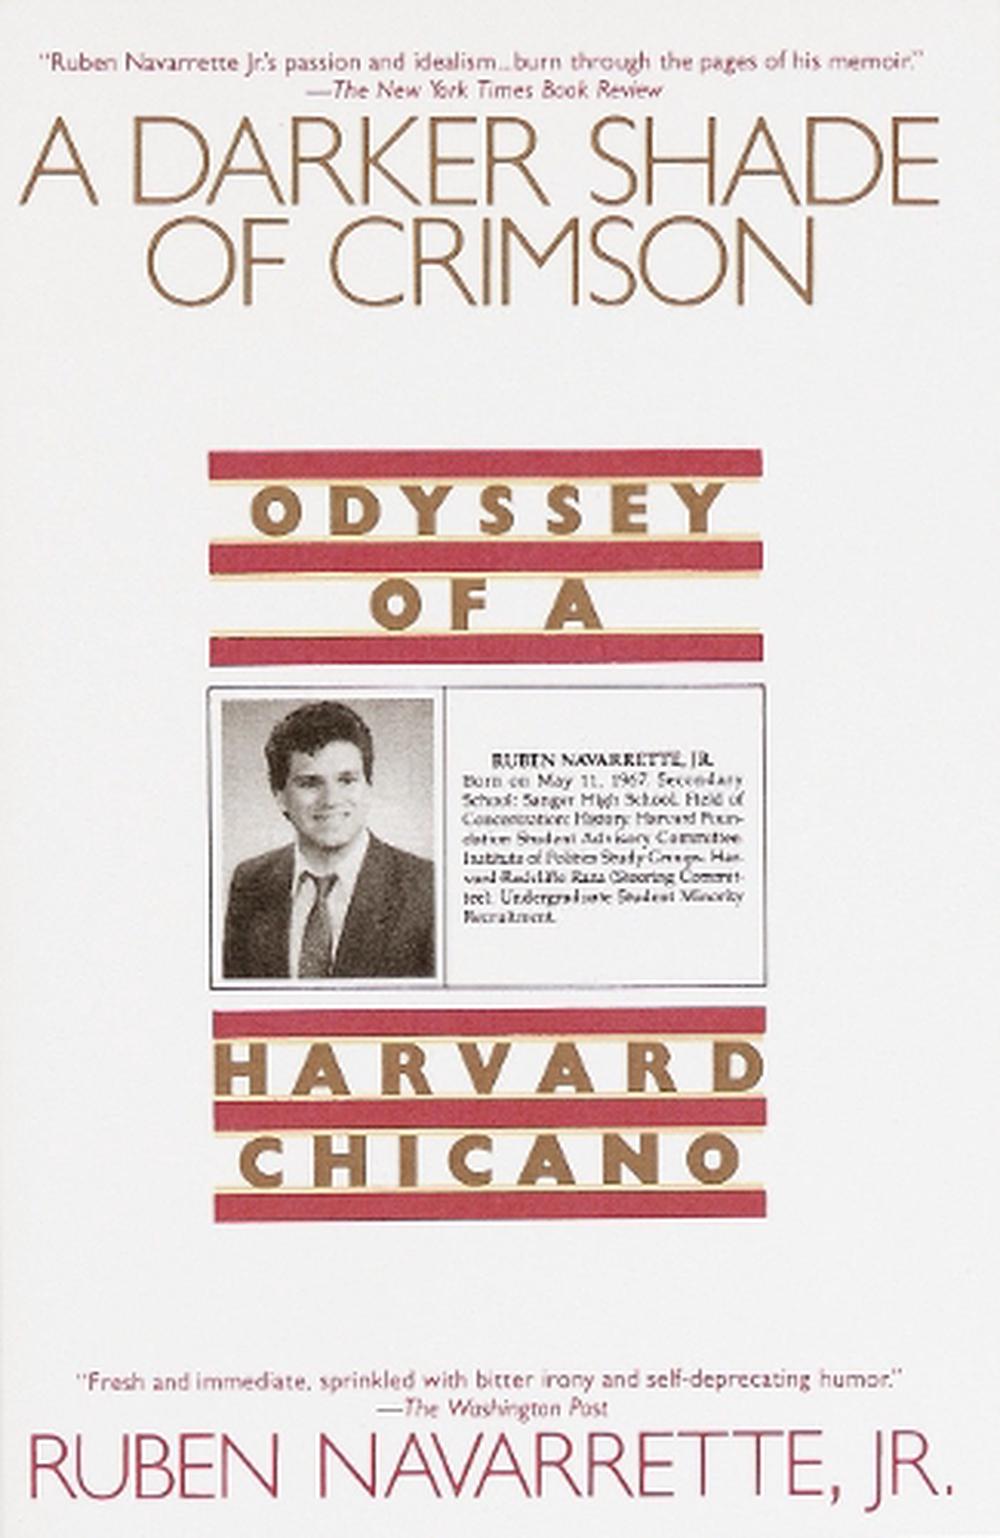 Darker Shade of Crimson Odyssey of a Harvard Chicano by Ruben Jr